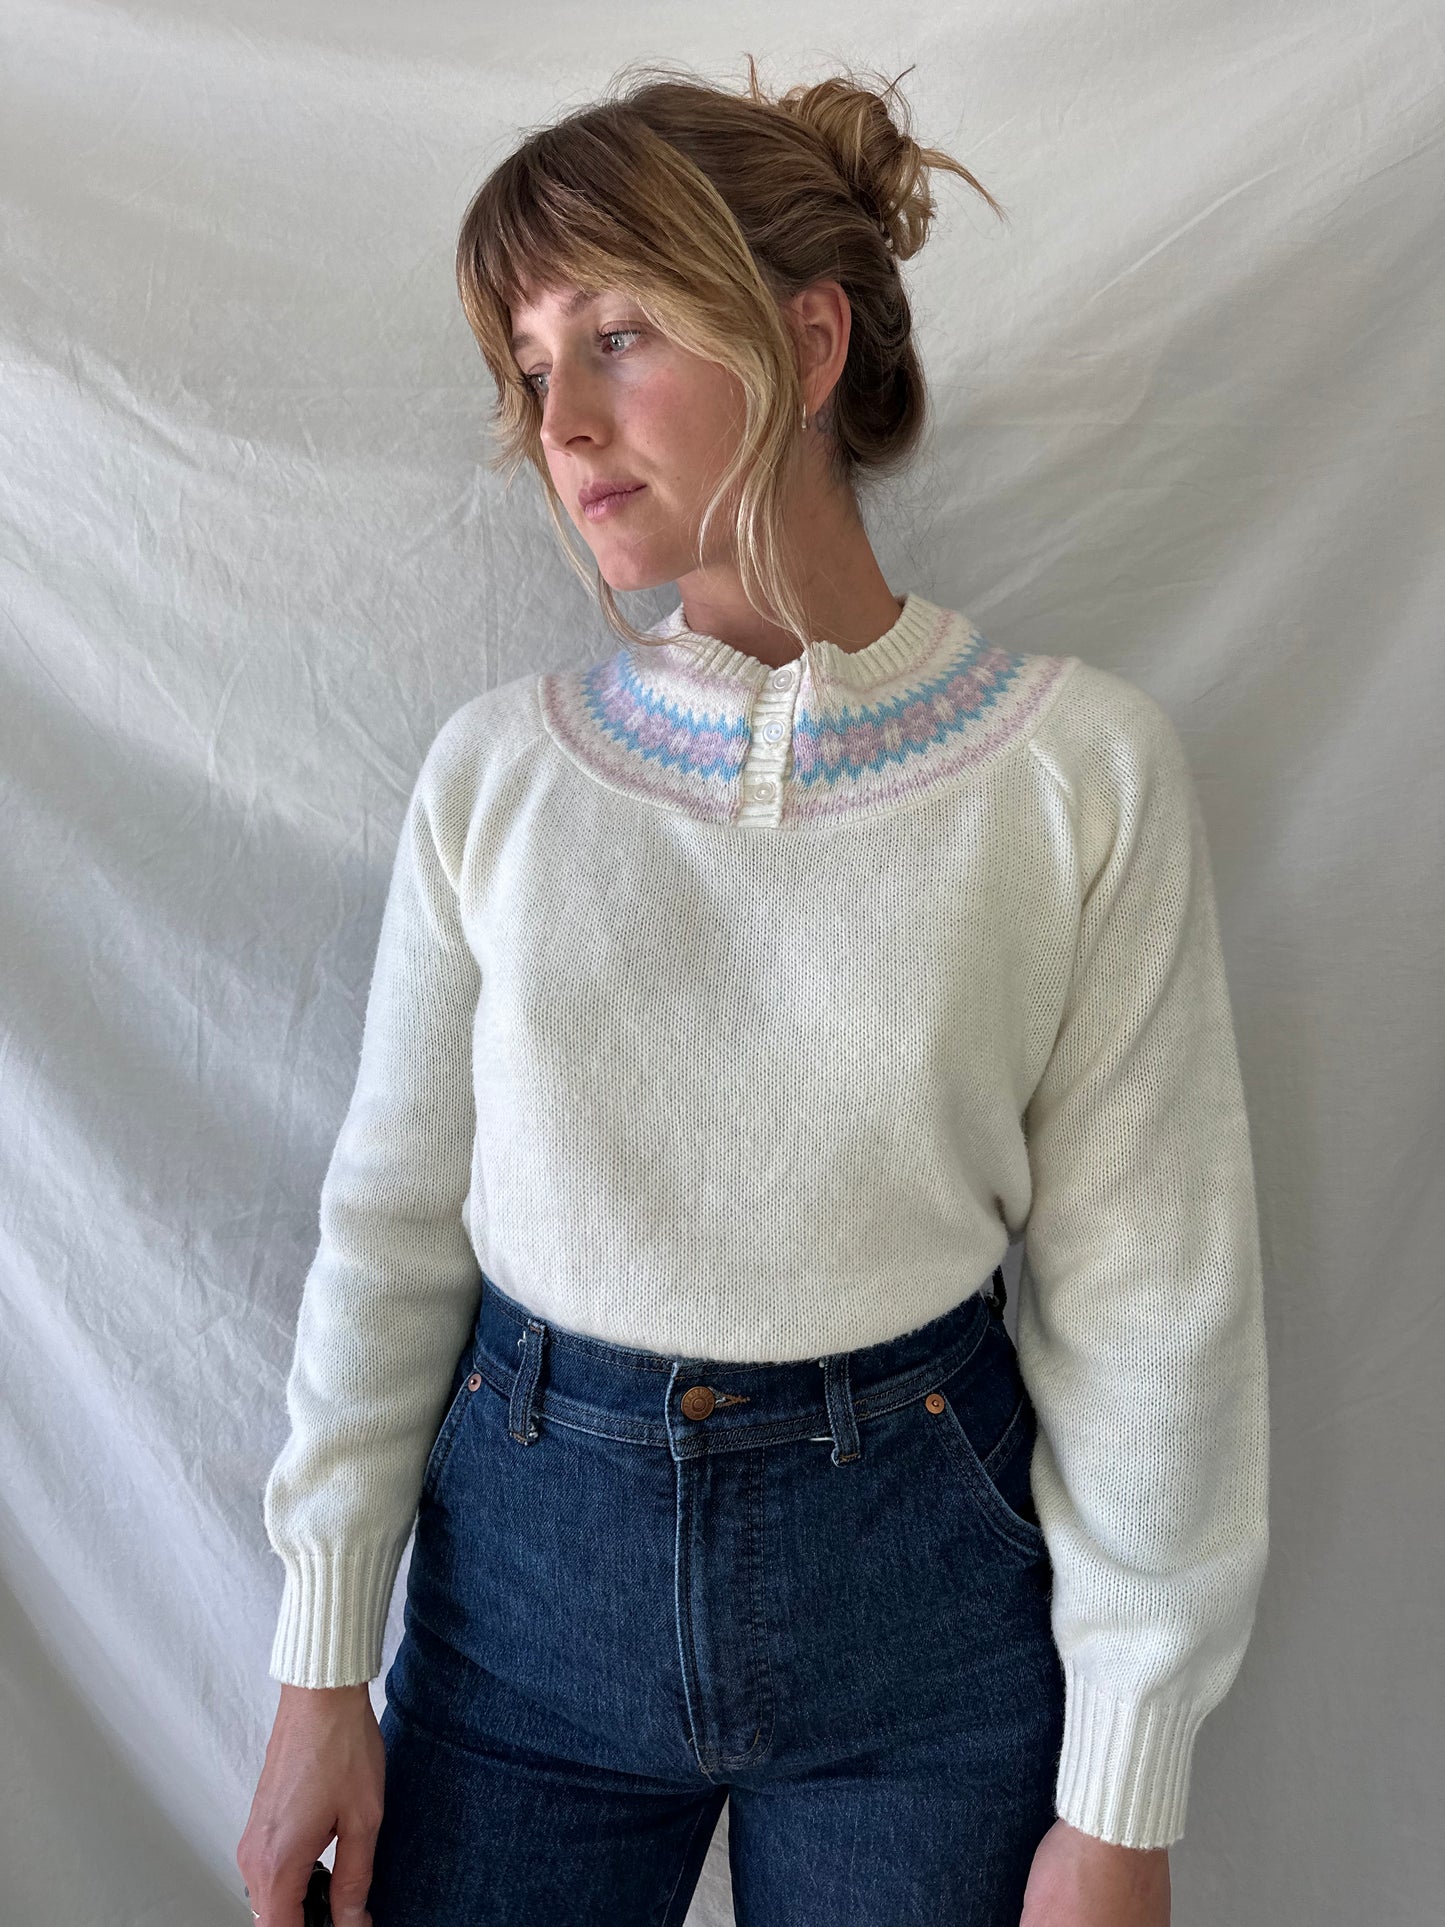 70s Garland Nordic sweater